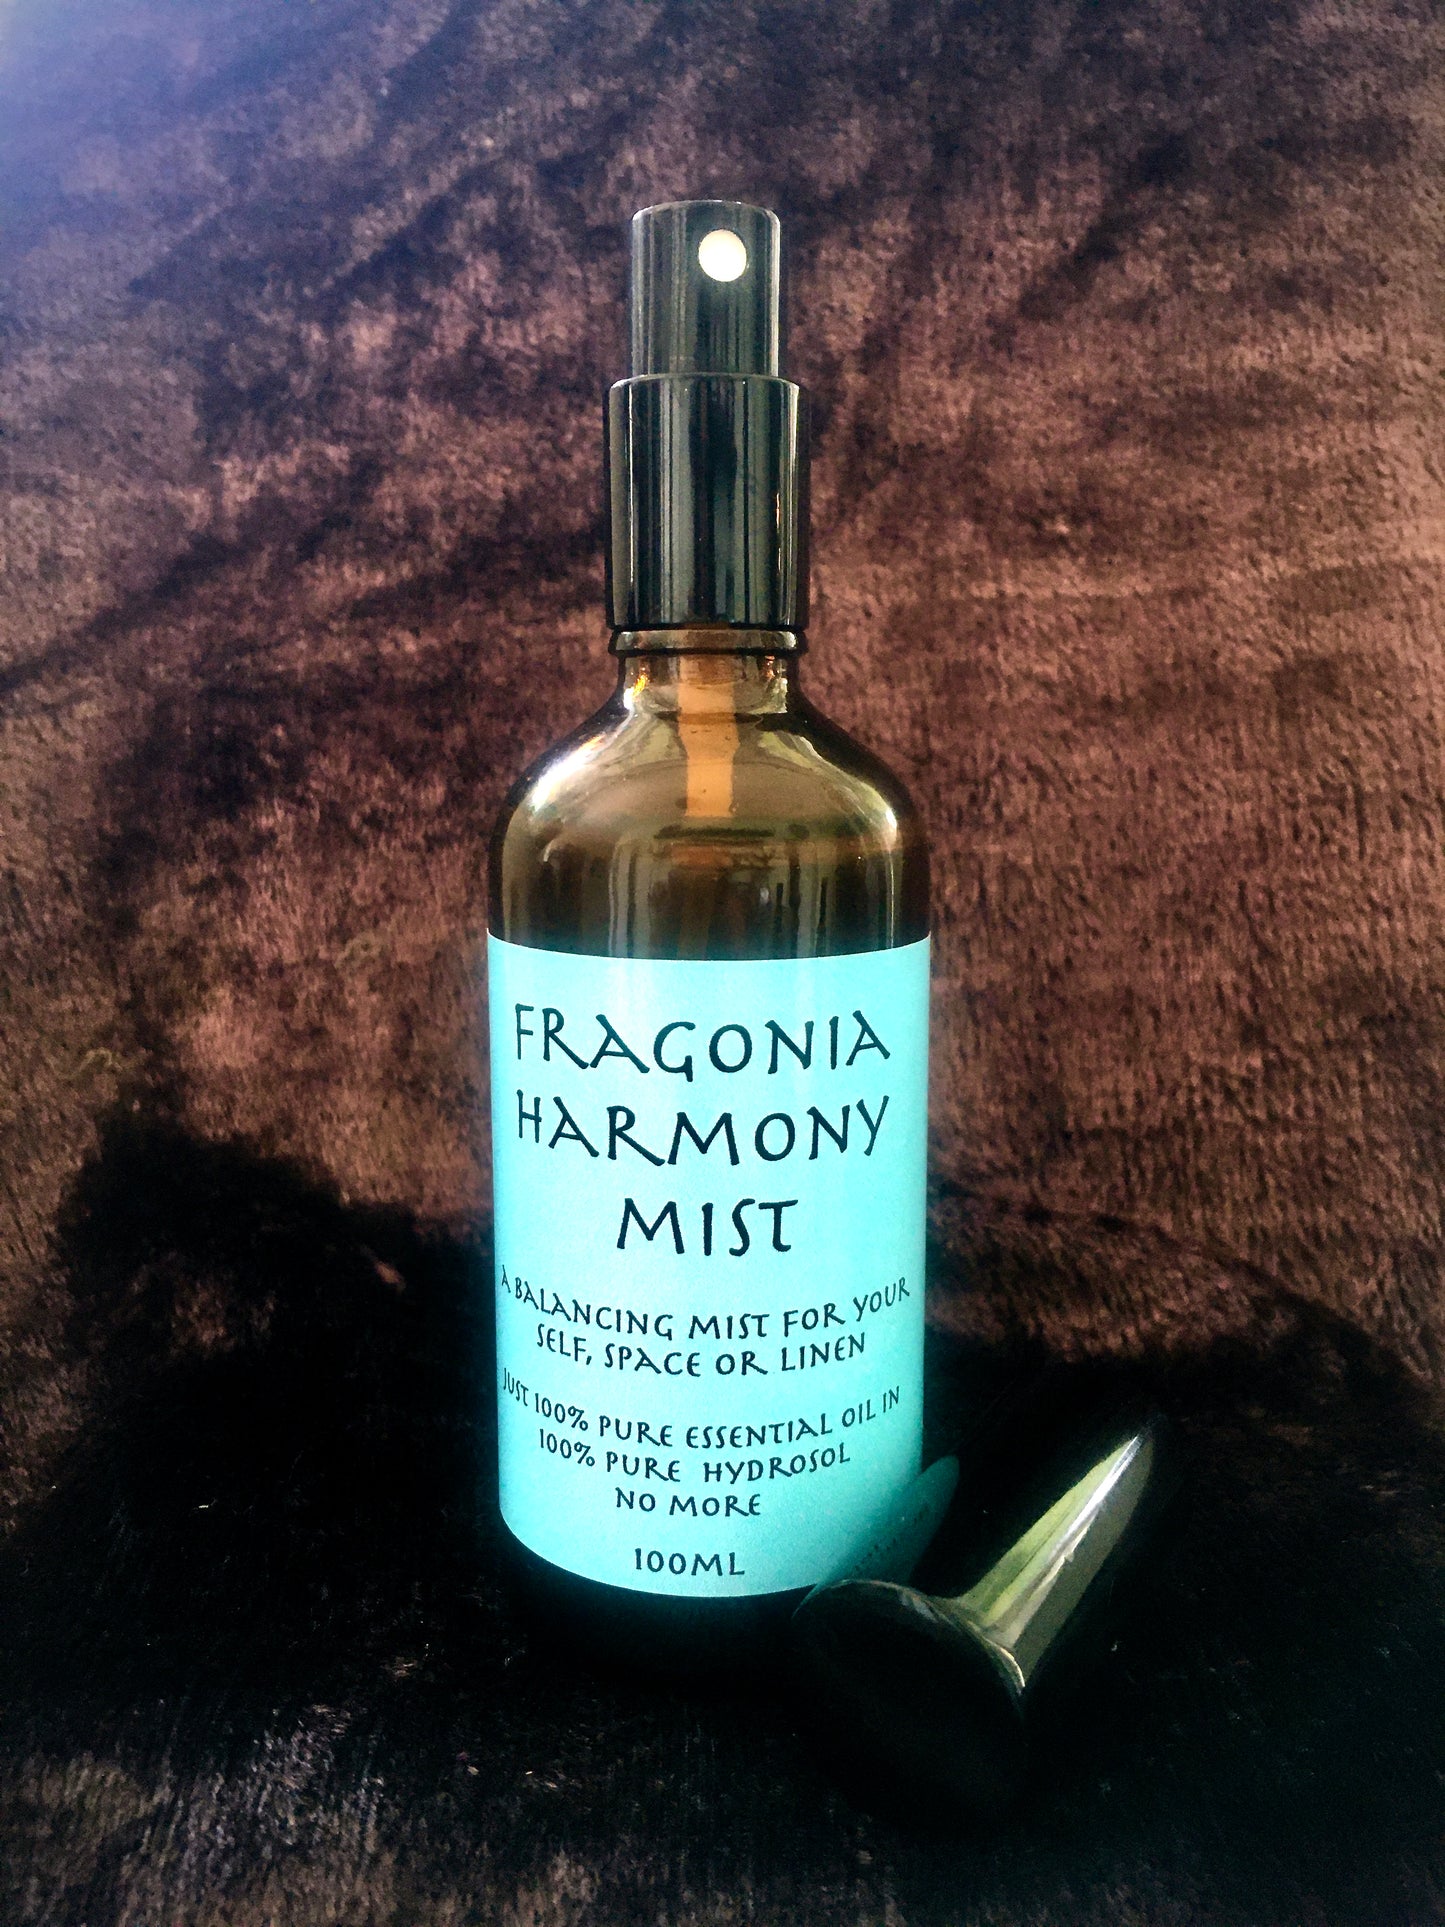 Fragonia Harmony Mist